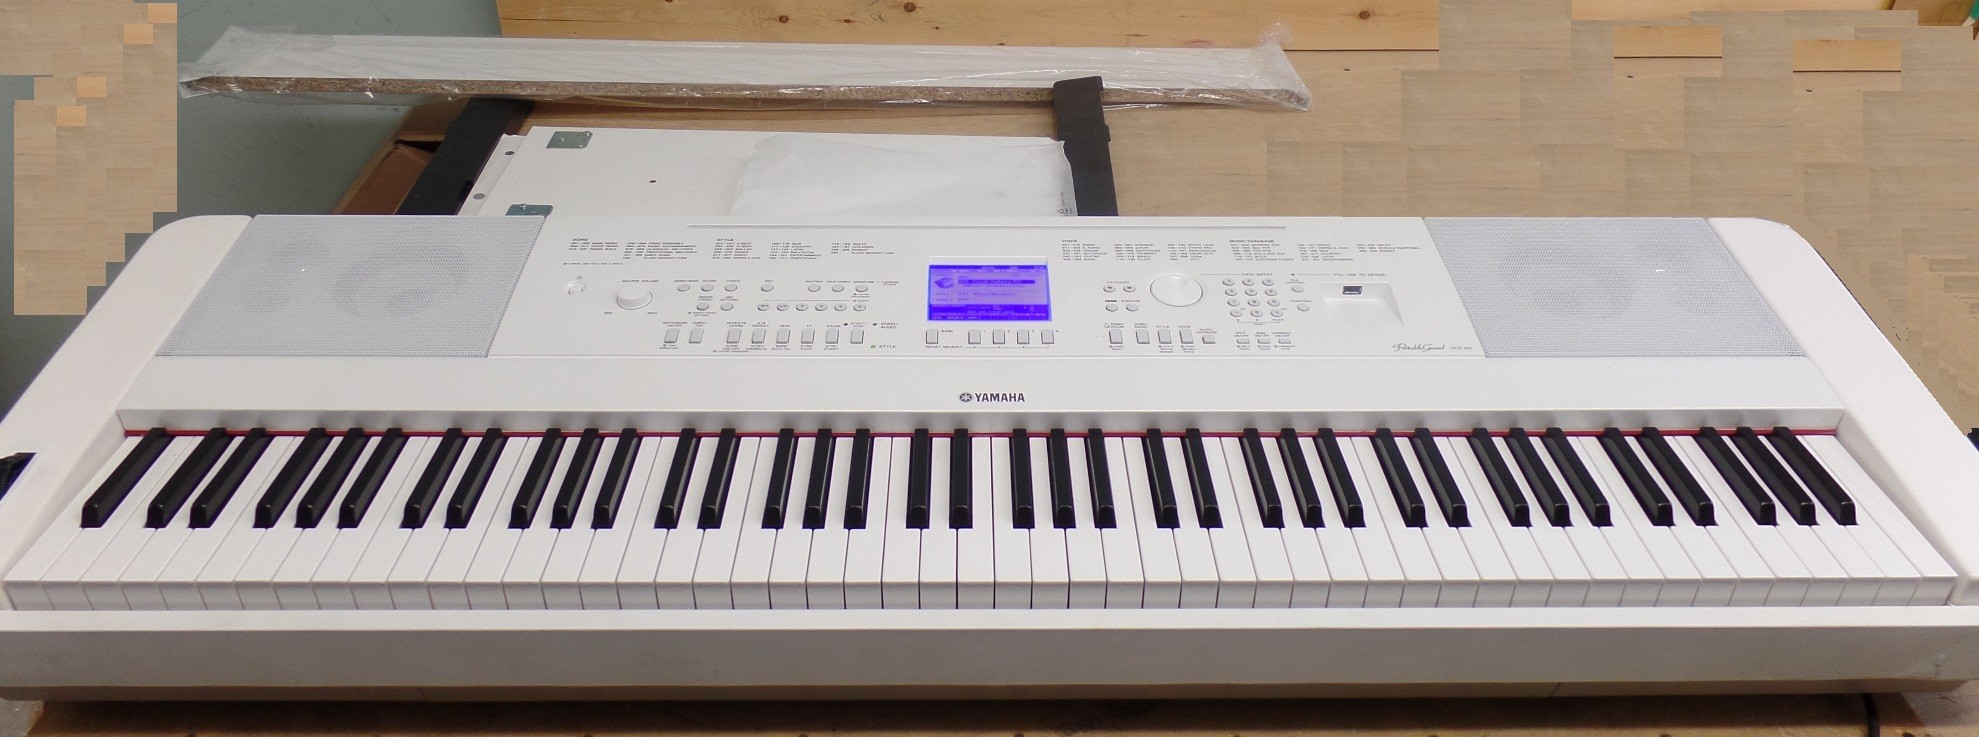 Yamaha DGX-660 88-Key Grand Digital Piano White - read description - cosmetics